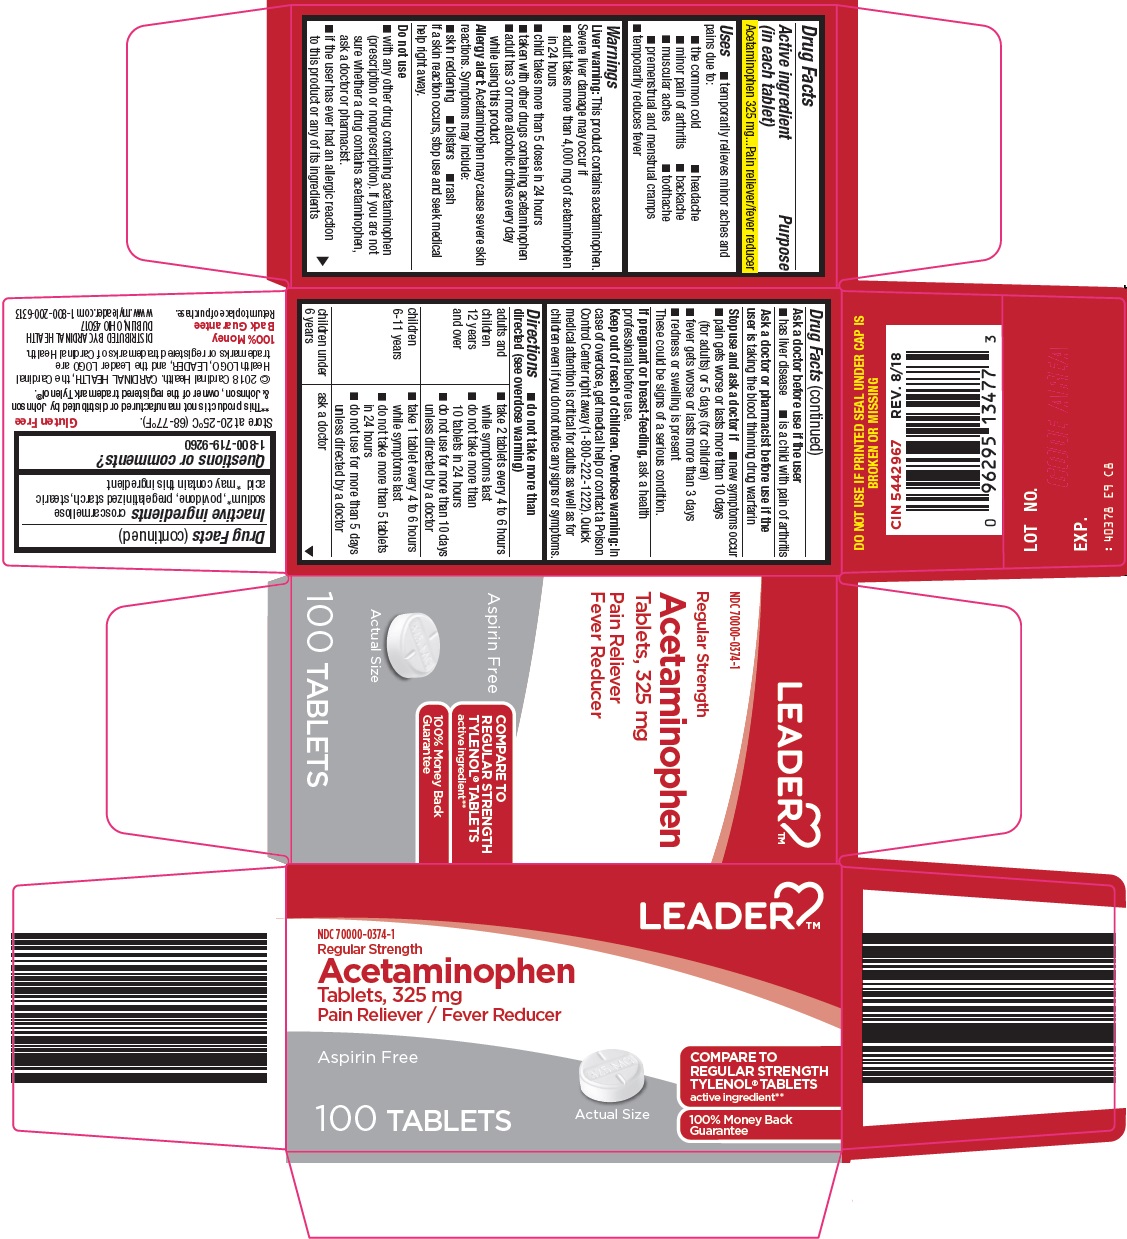 Acetaminophen (leader acetaminophen)